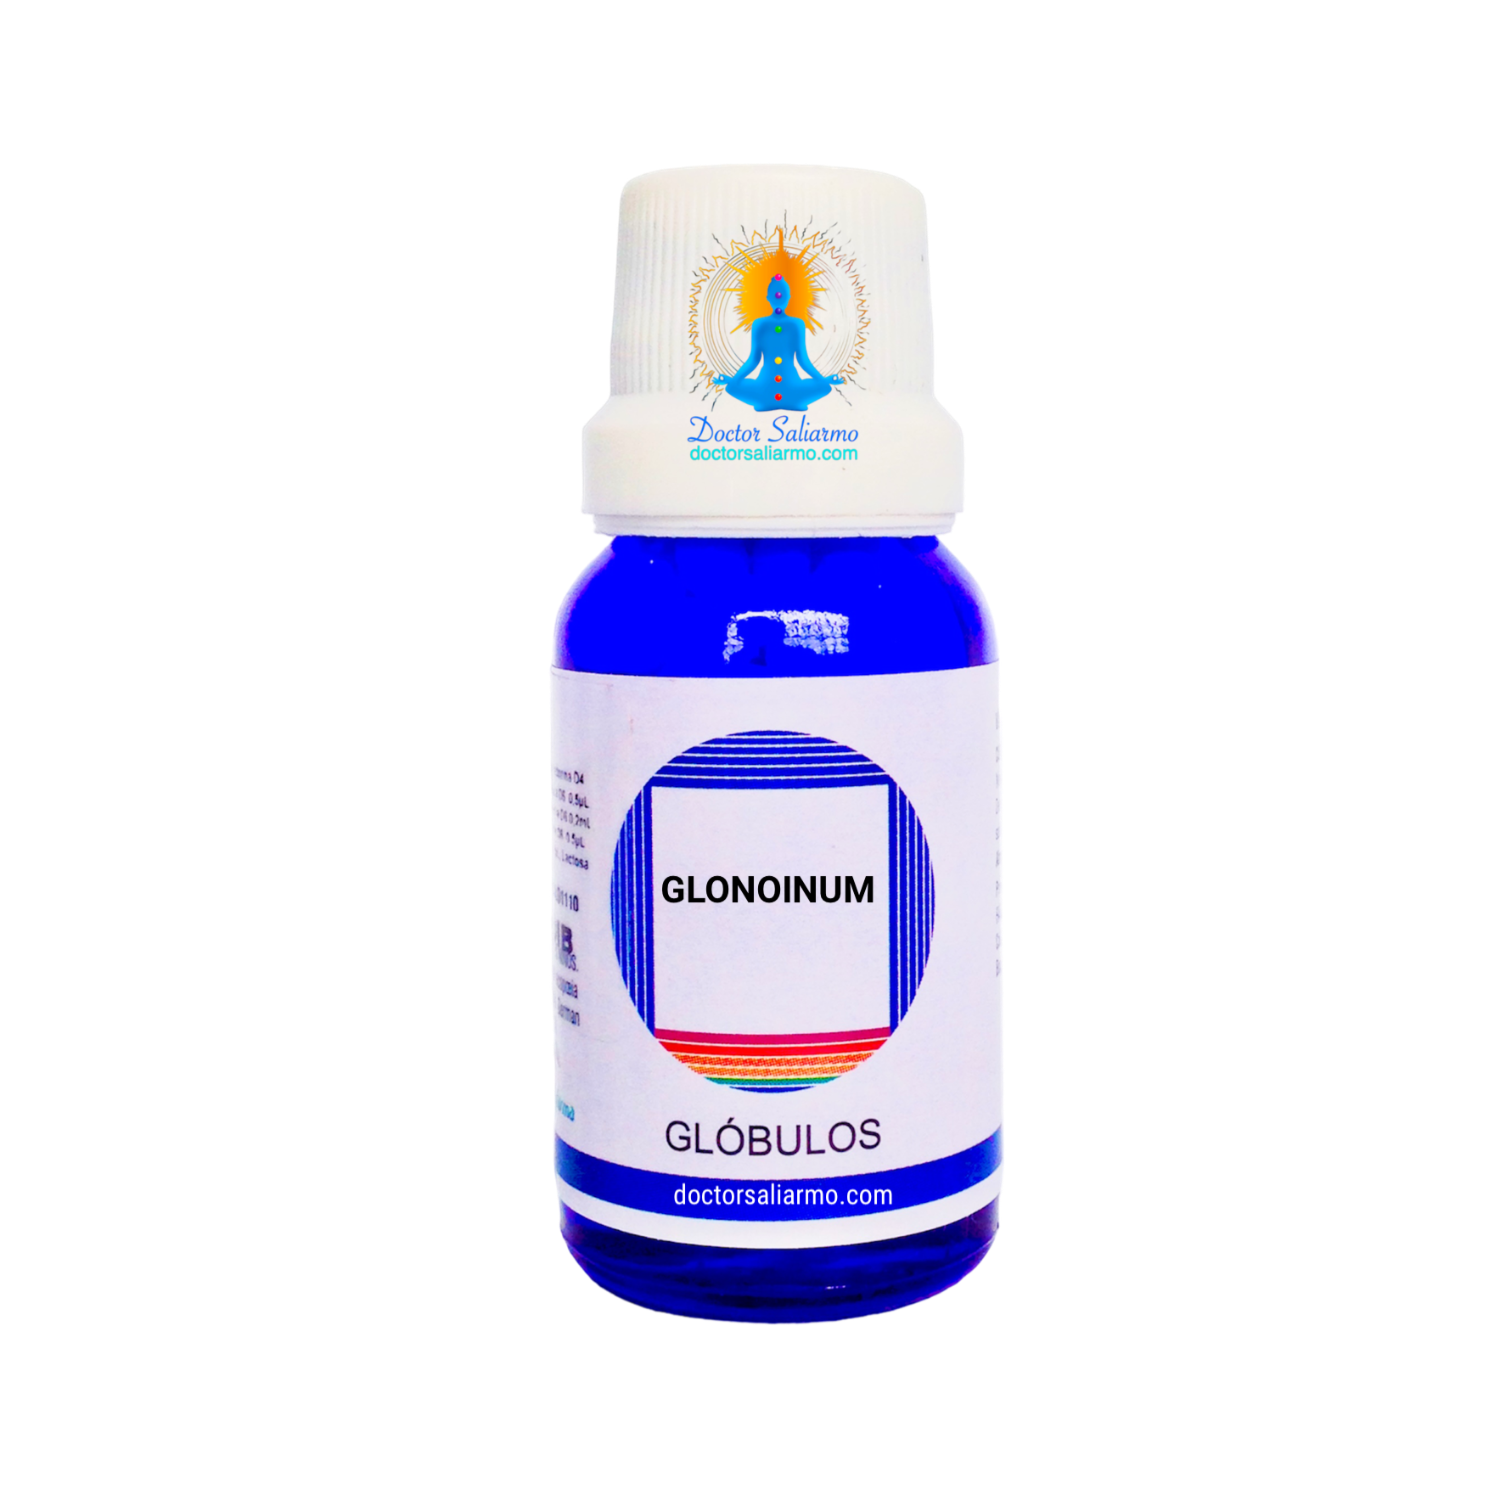 glonoinum útil en síntomas asociados a la menopausia.